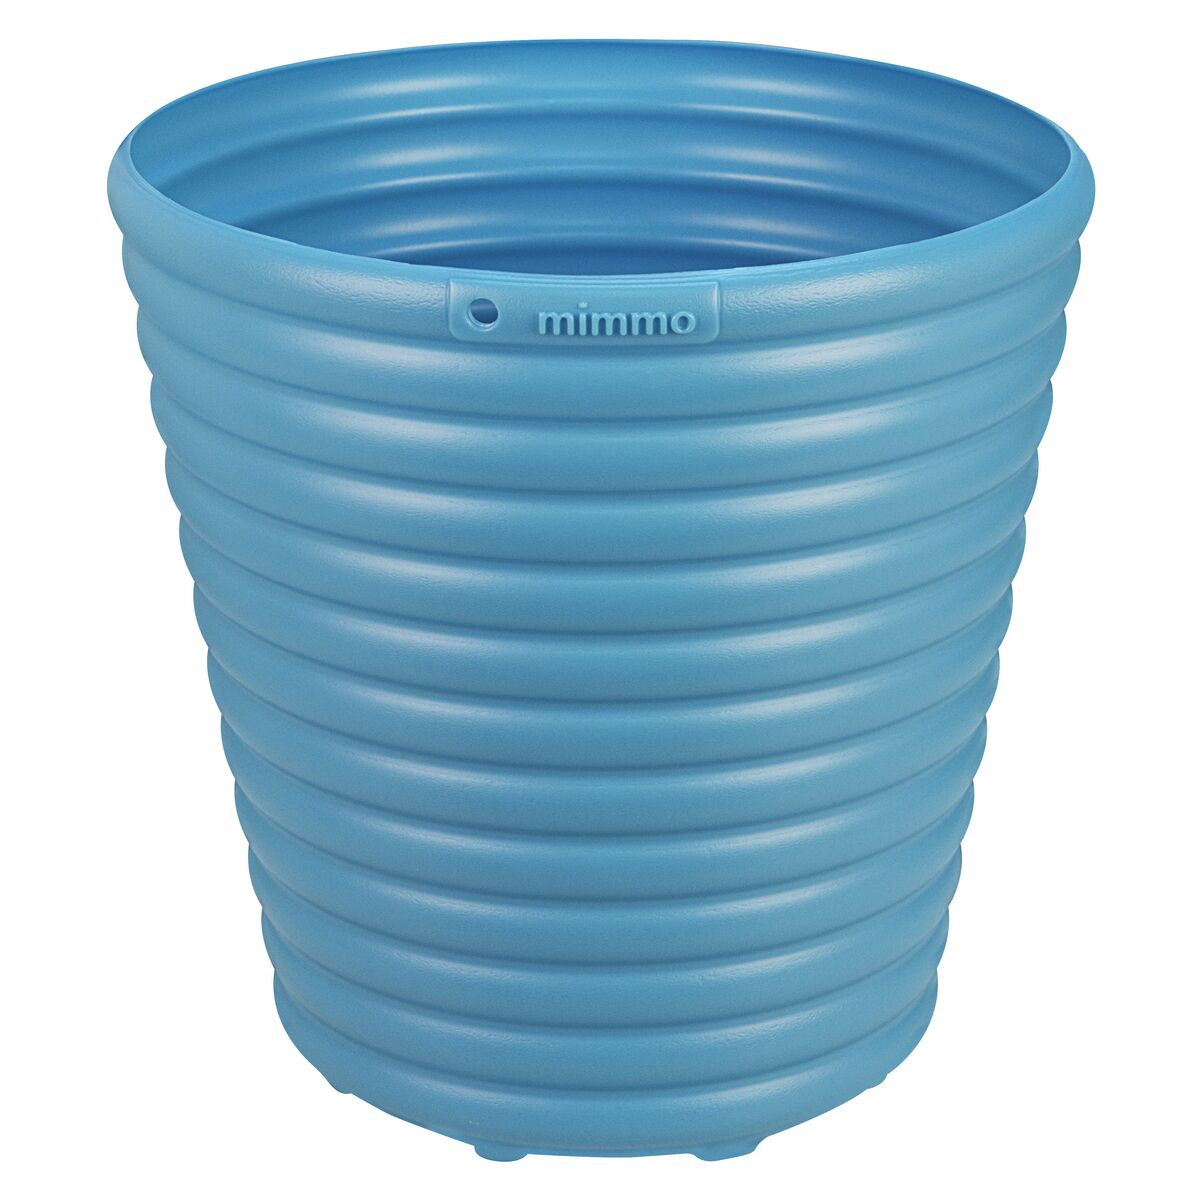 Tramontina's Mimmo 5.5 L Blue Plastic Plant Pot Holder